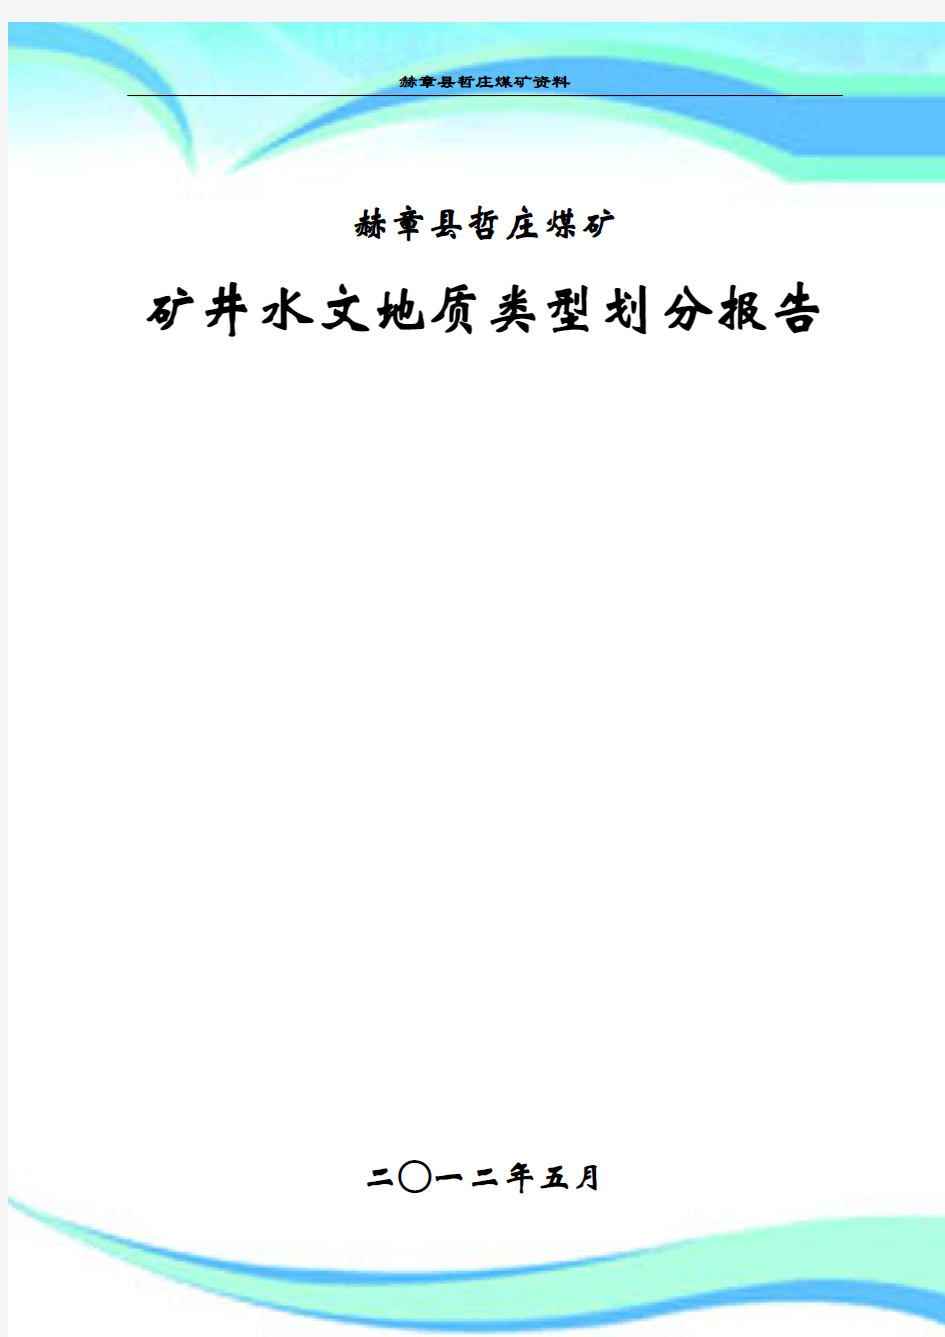 哲庄煤矿水文地质类型划分报告